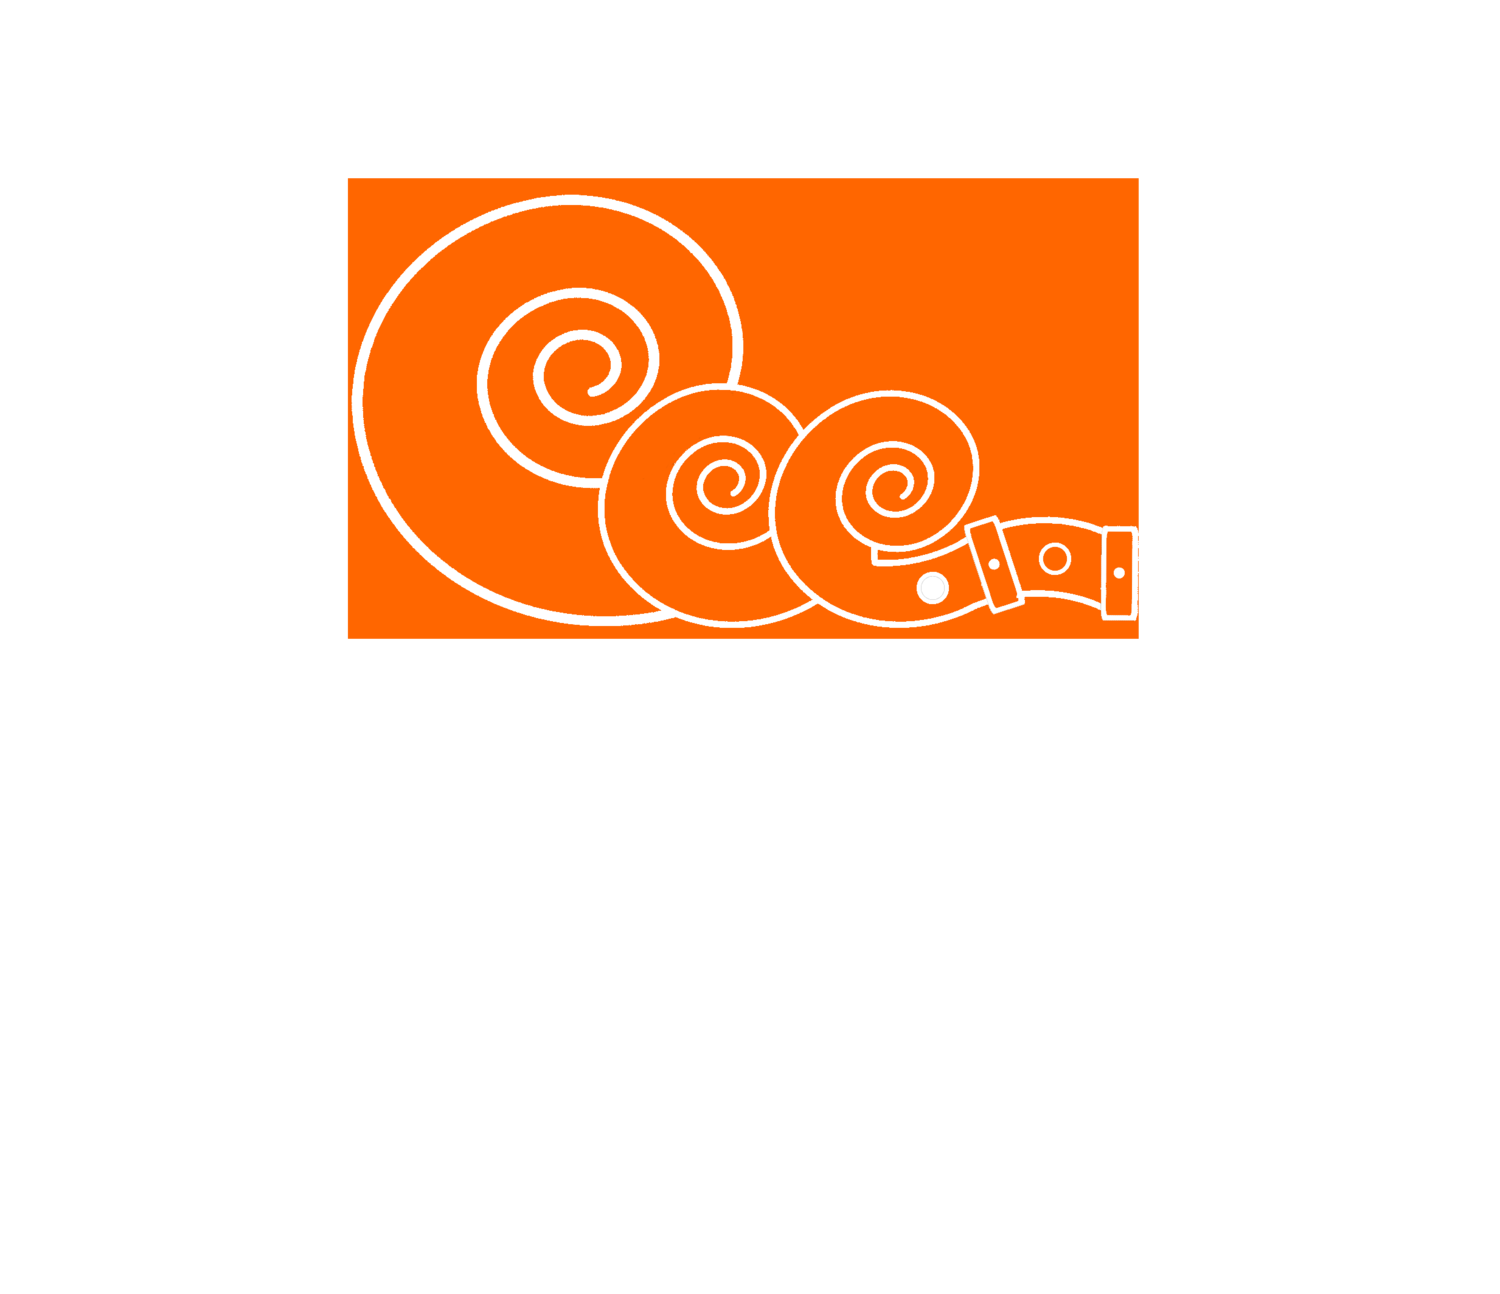 Maxim Strings / Wedding quartet wedding Music in Napa, Sonoma 